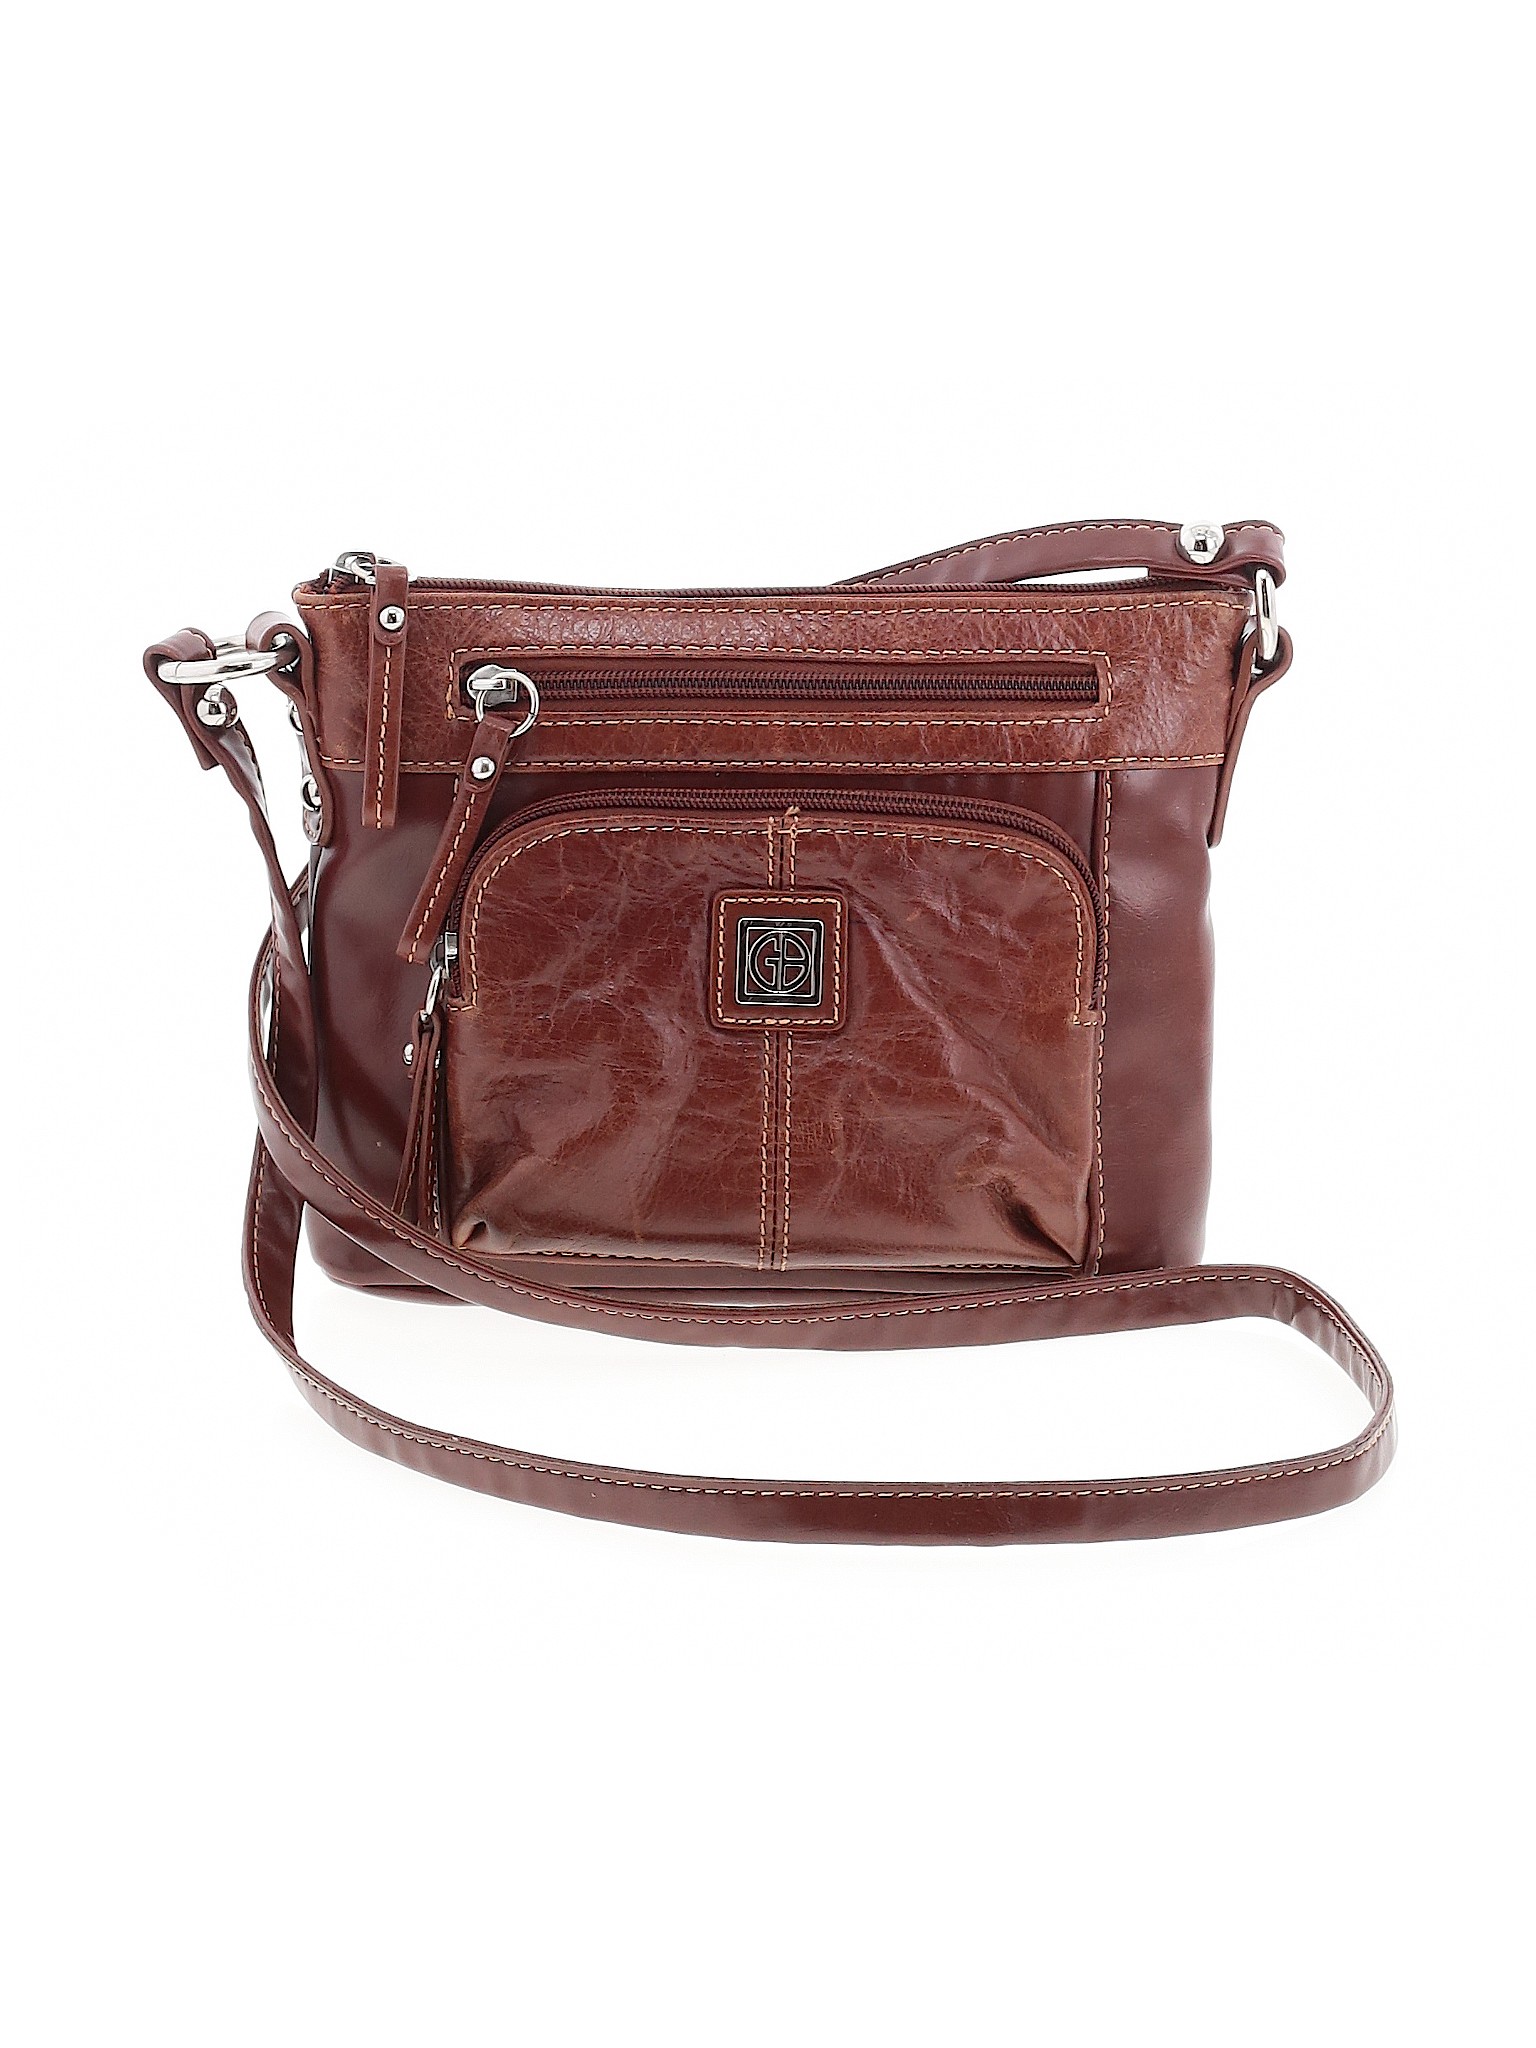 Giani Bernini Women Brown Leather Crossbody Bag One Size | eBay